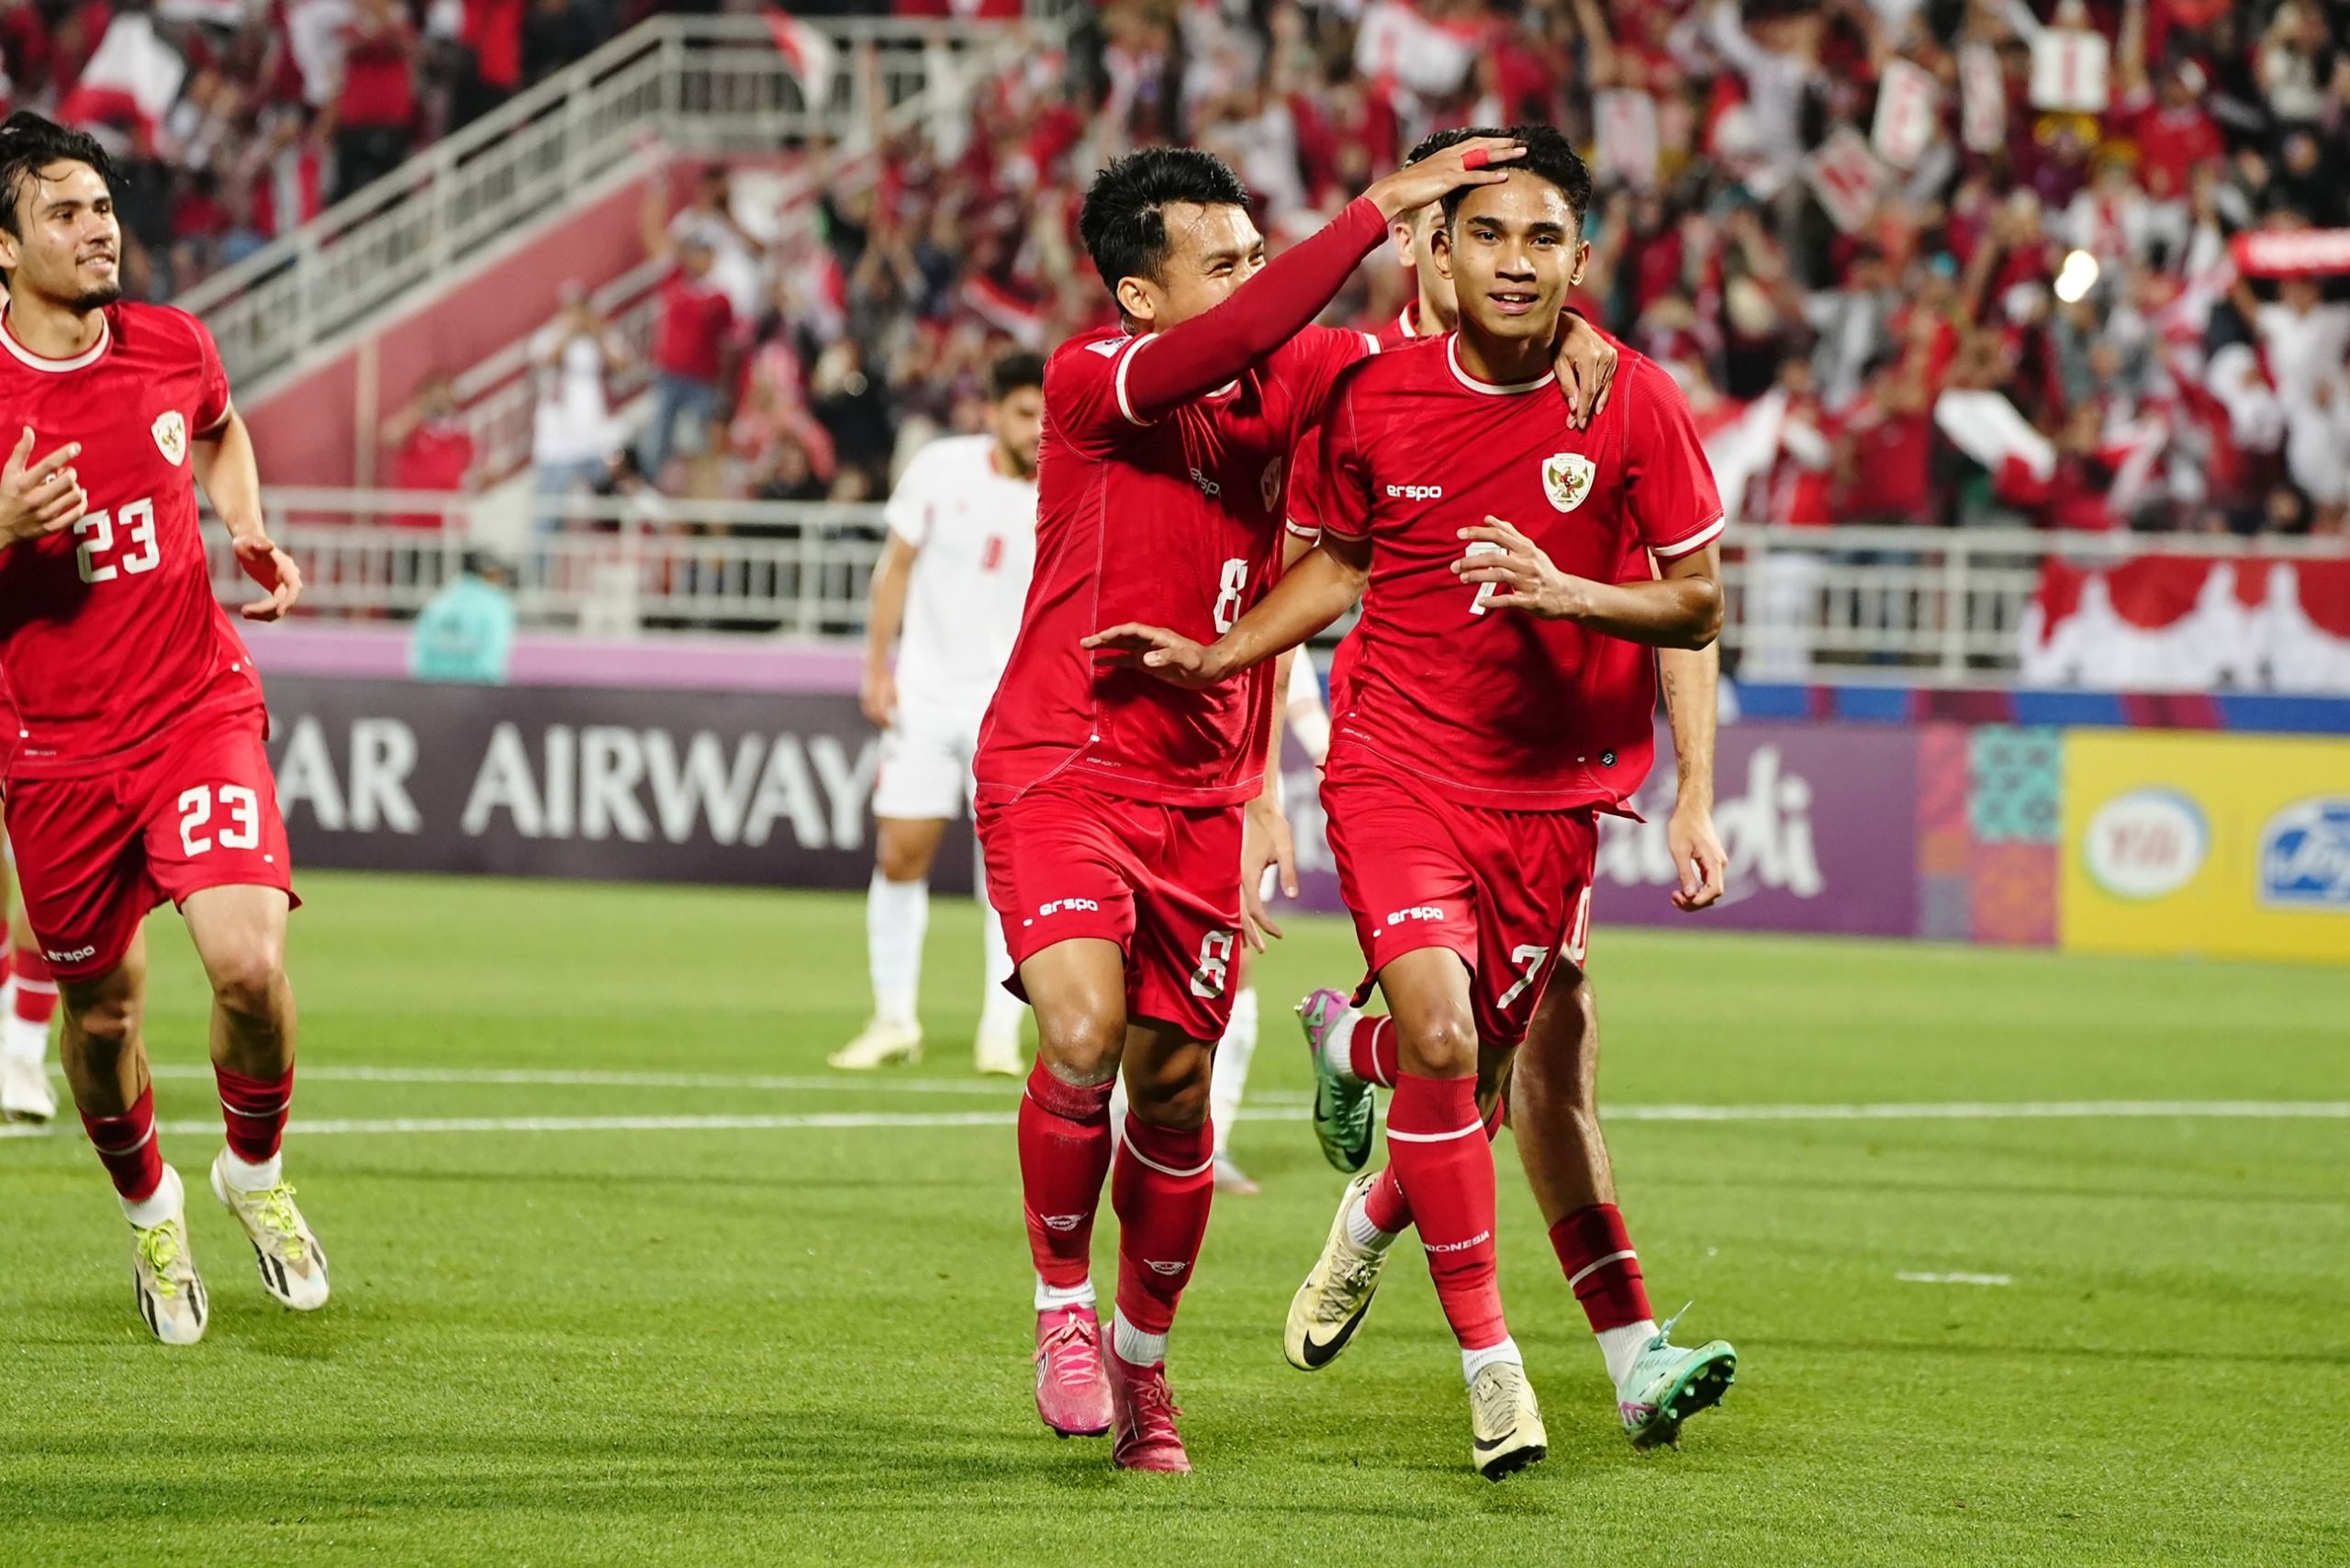 Sebanyak 23 pengusaha memberikan bonus untuk Timnas Indonesia U-23 asuhan Shin Tae-yong sebesar Rp23 miliar usai mencetak sejarah pertama kalinya lolos ke semifinal Piala Asia U-23 yang dihelat di Qatar.